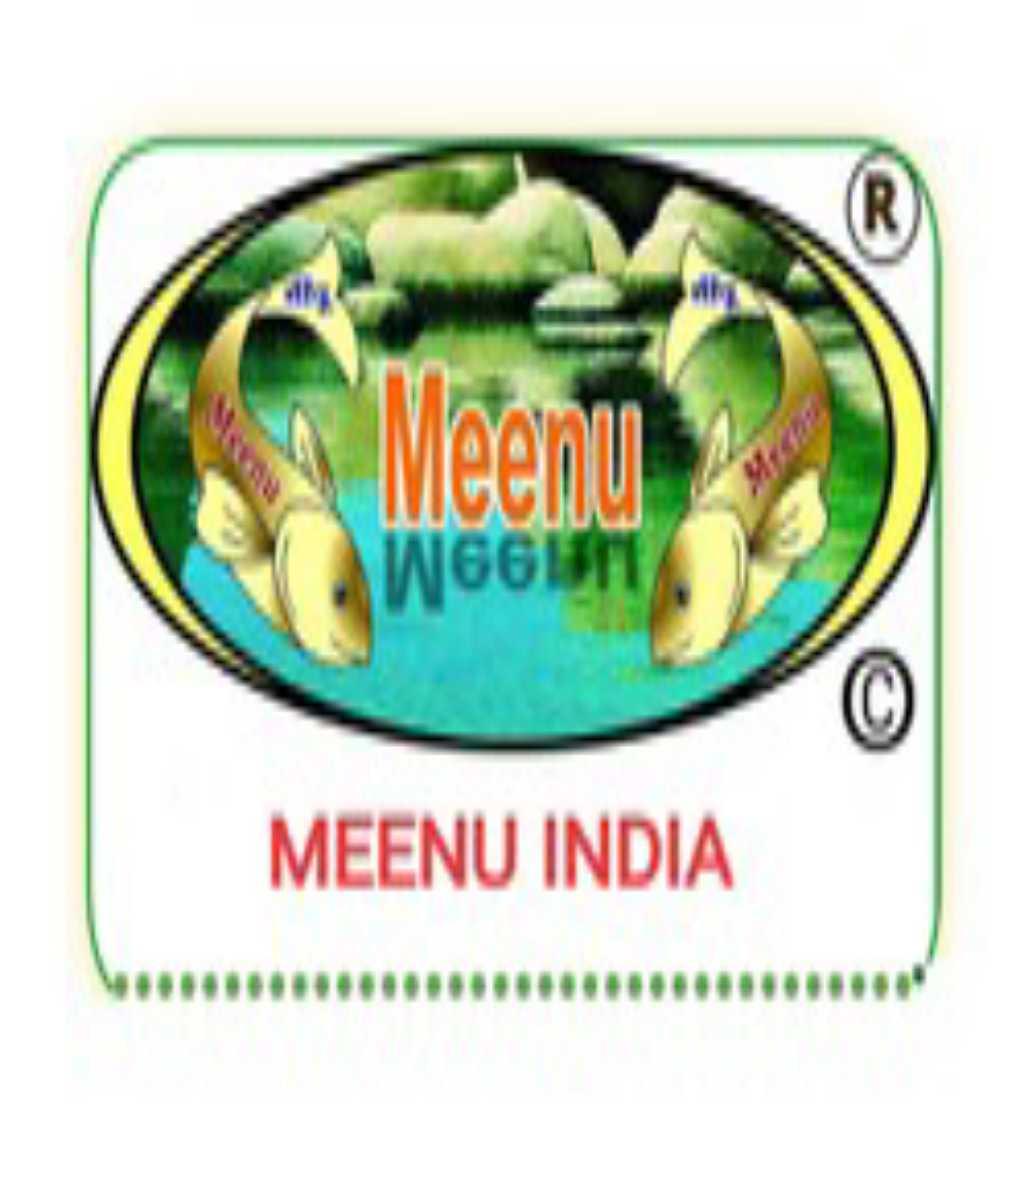 Meenu Glass Company (INDIA)